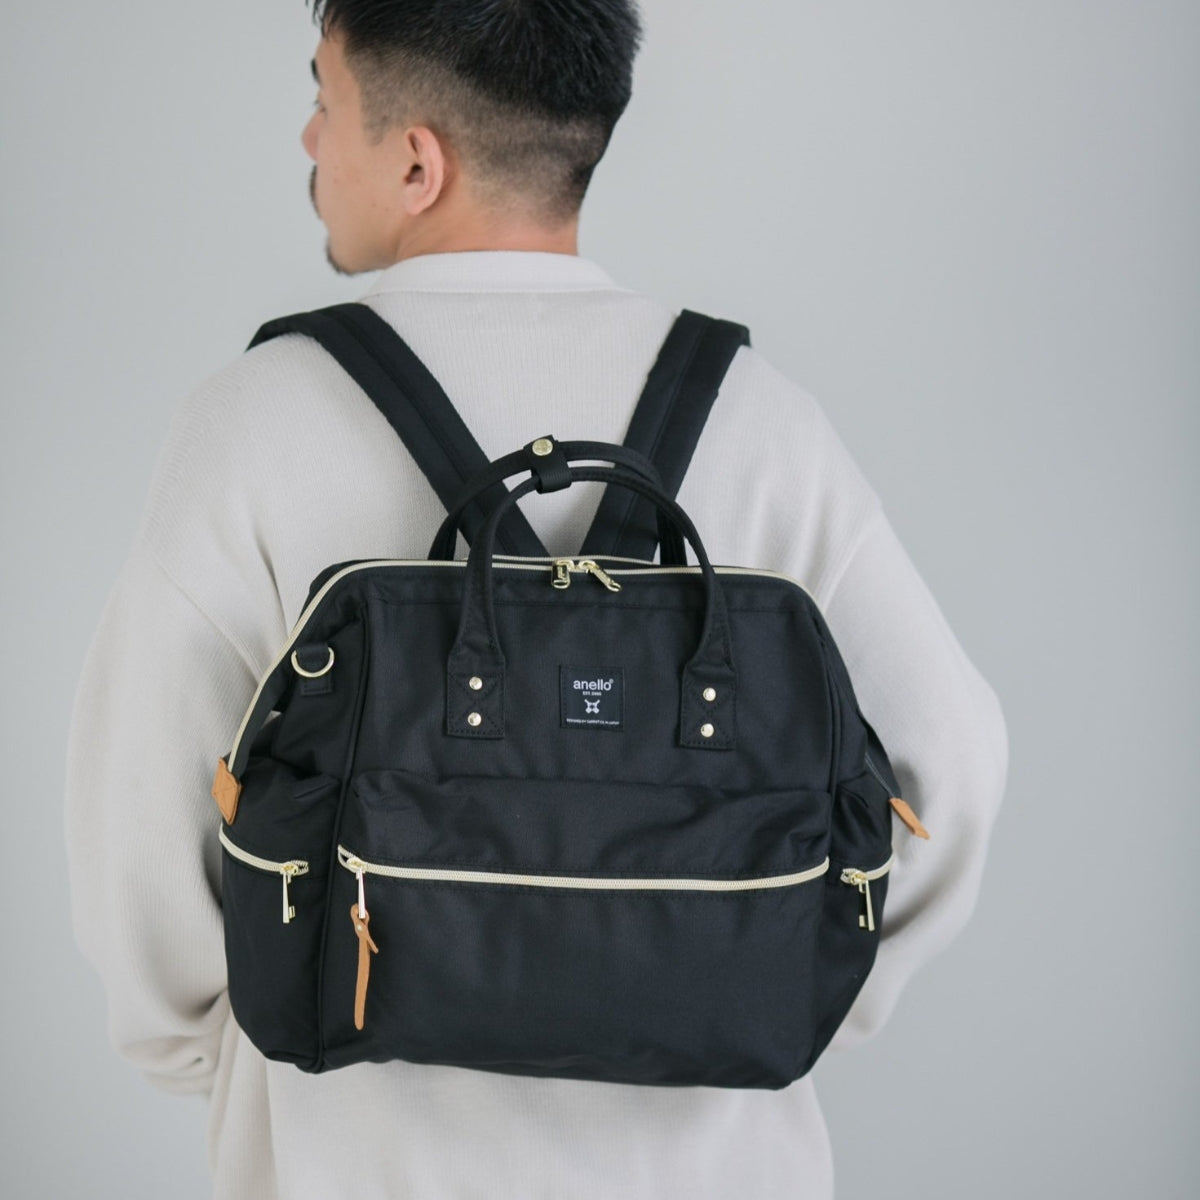 A.N.E.L.L.O Japan Made Mini Boston PU Leather 2 Way Unisex Shoulder Bag -  Beige